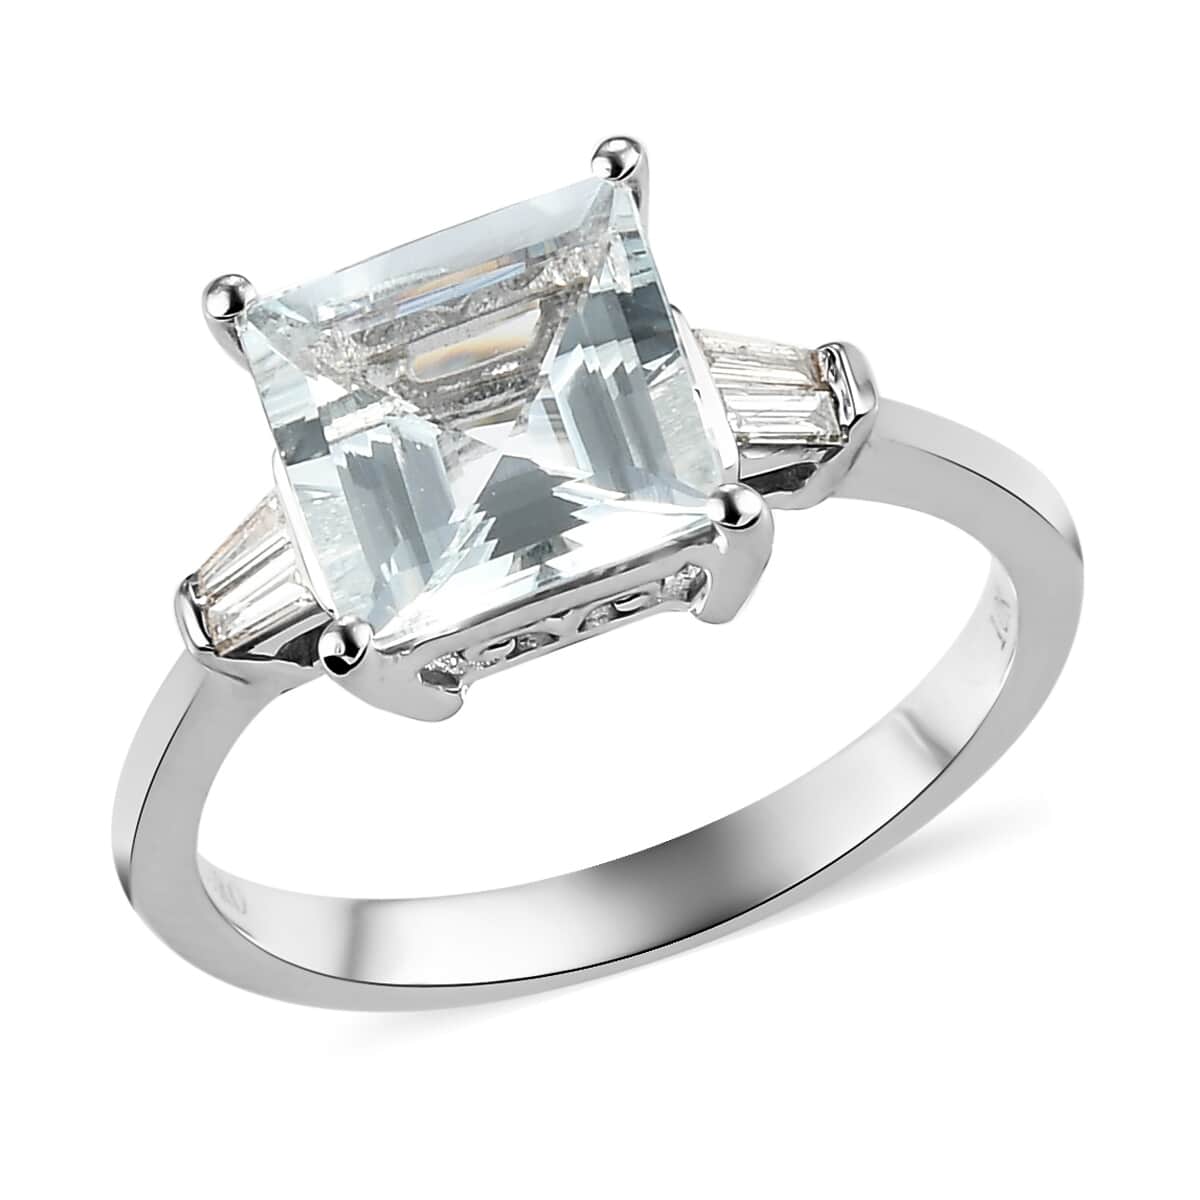 Luxoro 10K White Gold Premium Espirito Santo Aquamarine and Diamond Ring (Size 6.0) 2.65 Grams 2.25 ctw image number 0